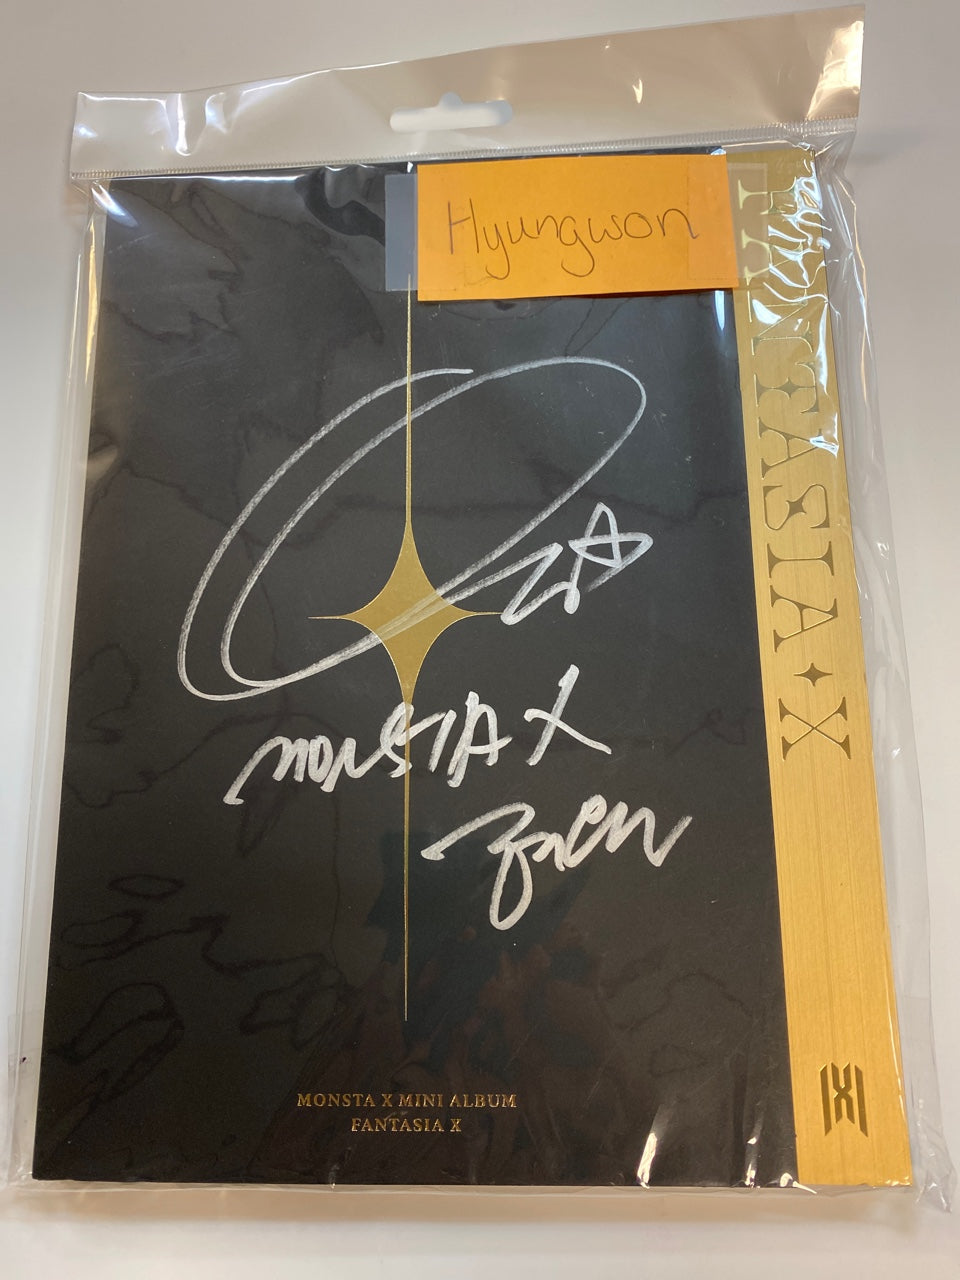 hyungwon signed